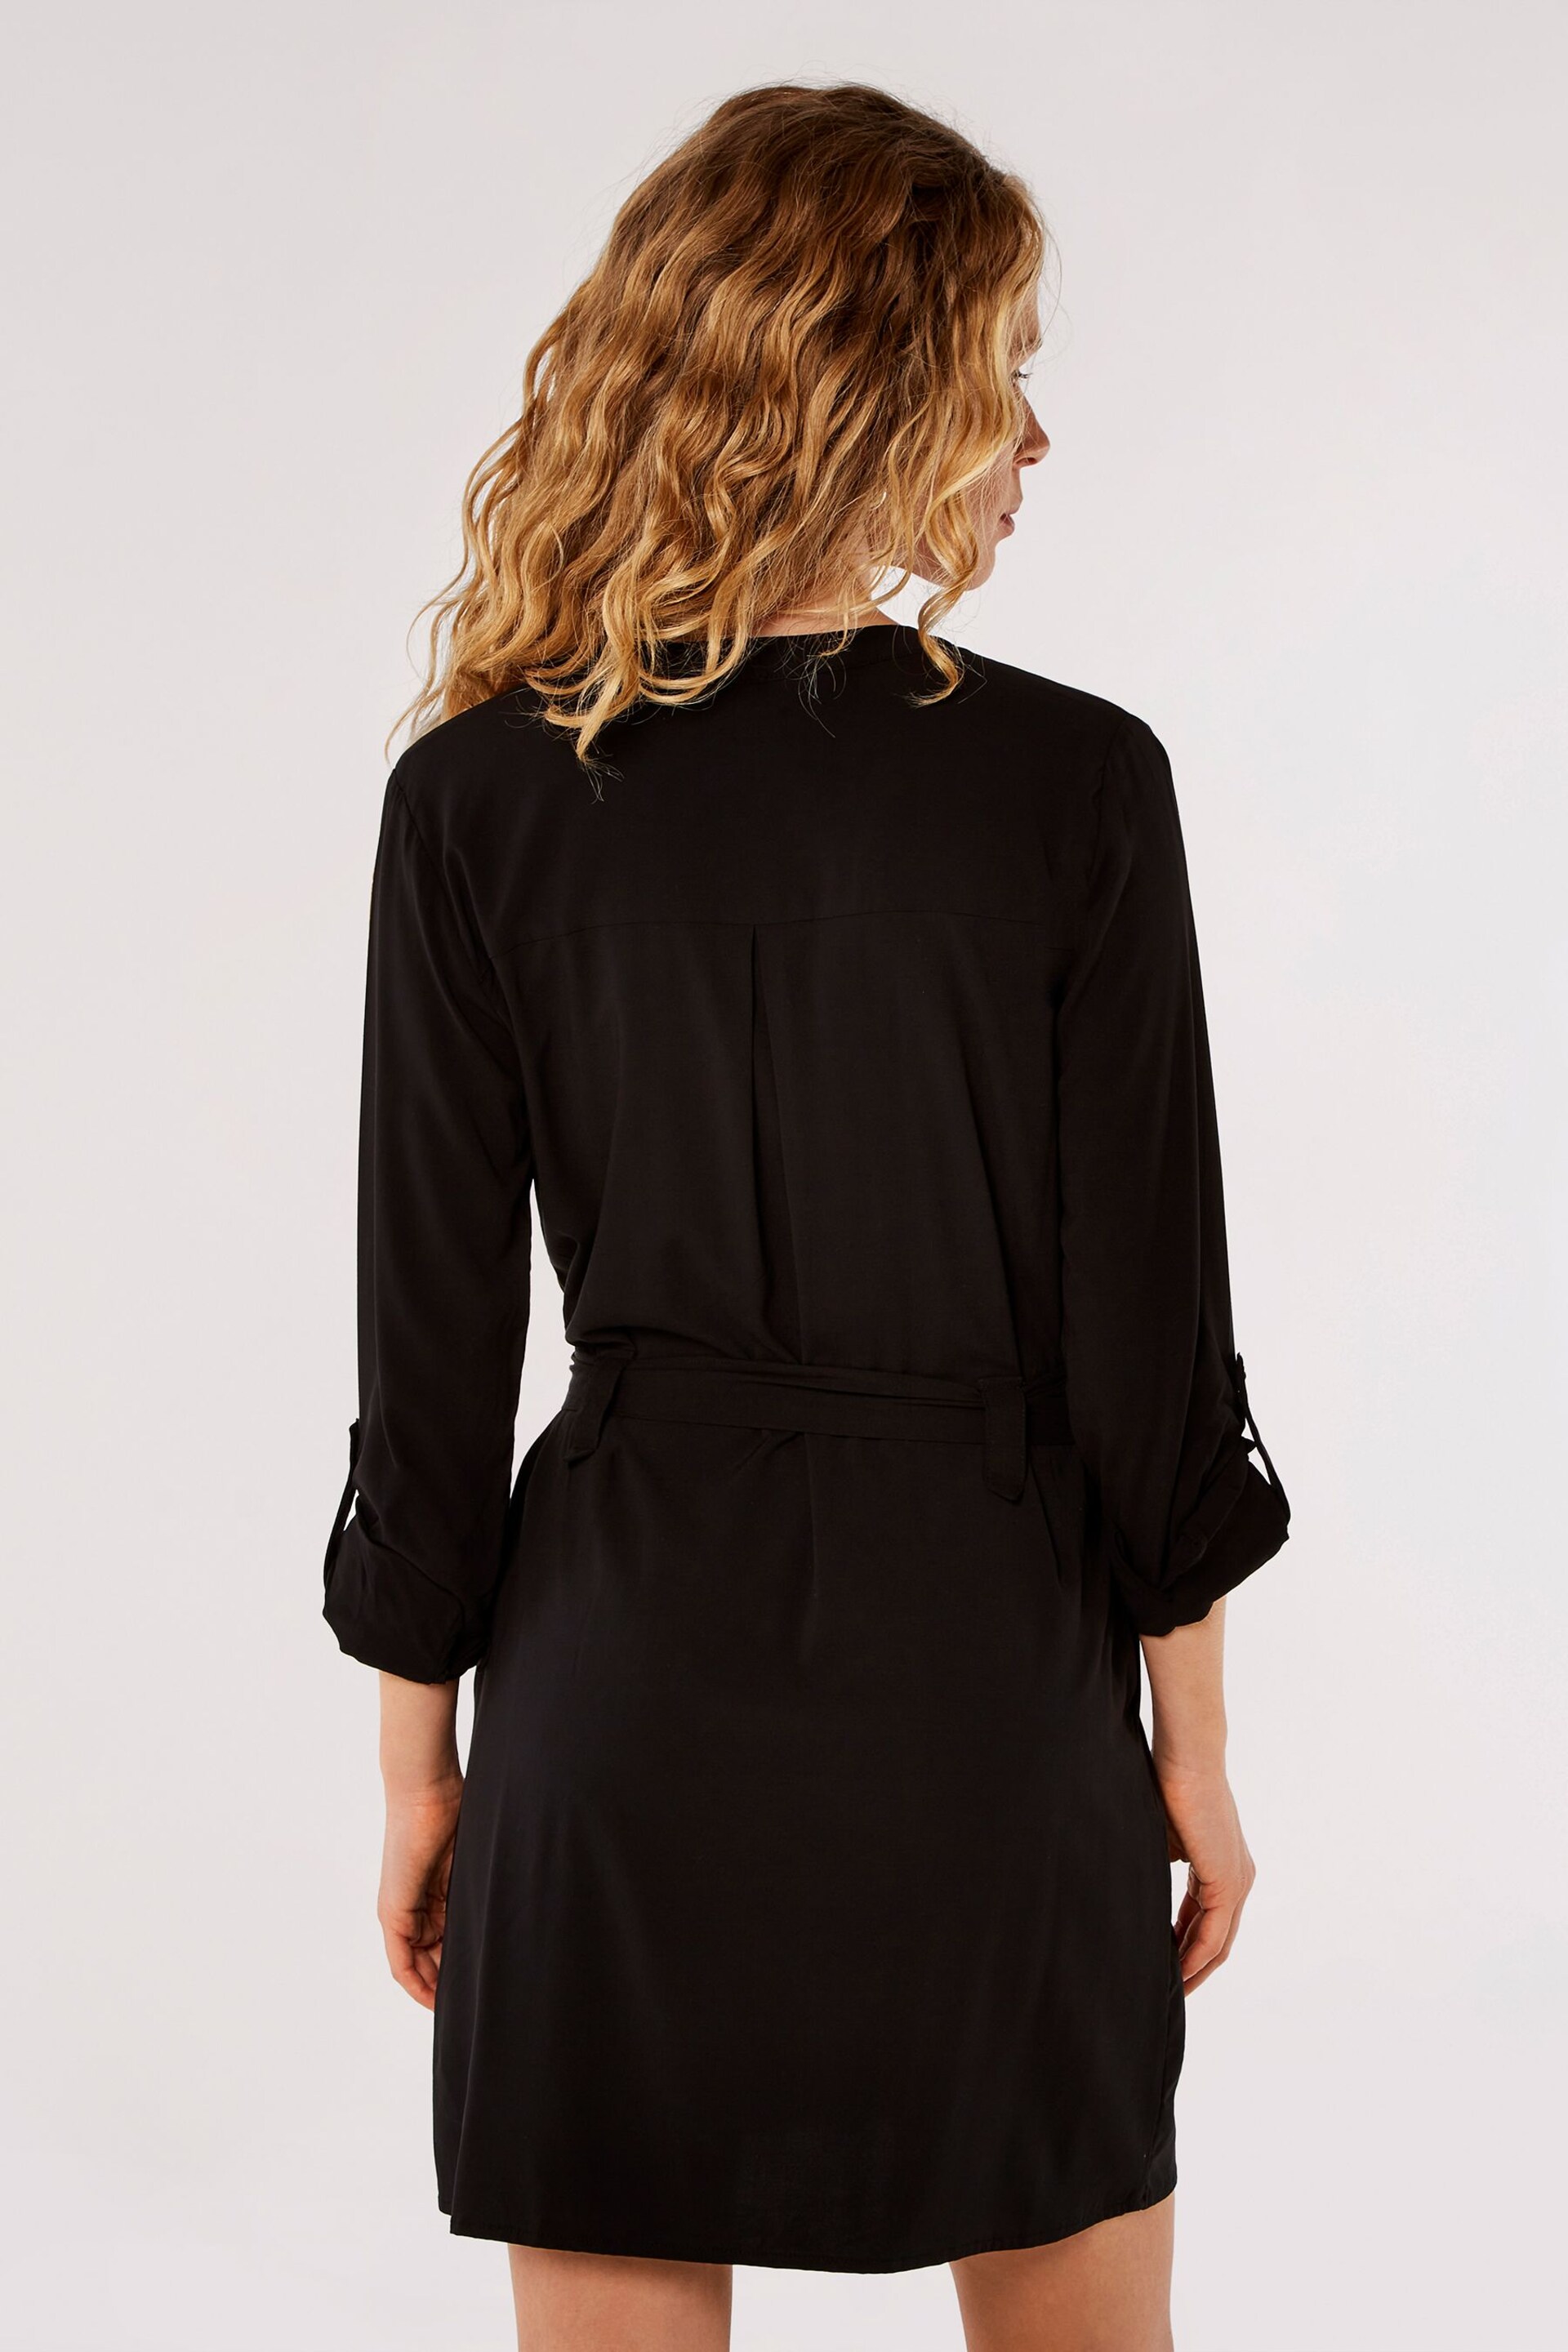 Apricot Black Utility Shirt Dress - Image 2 of 4